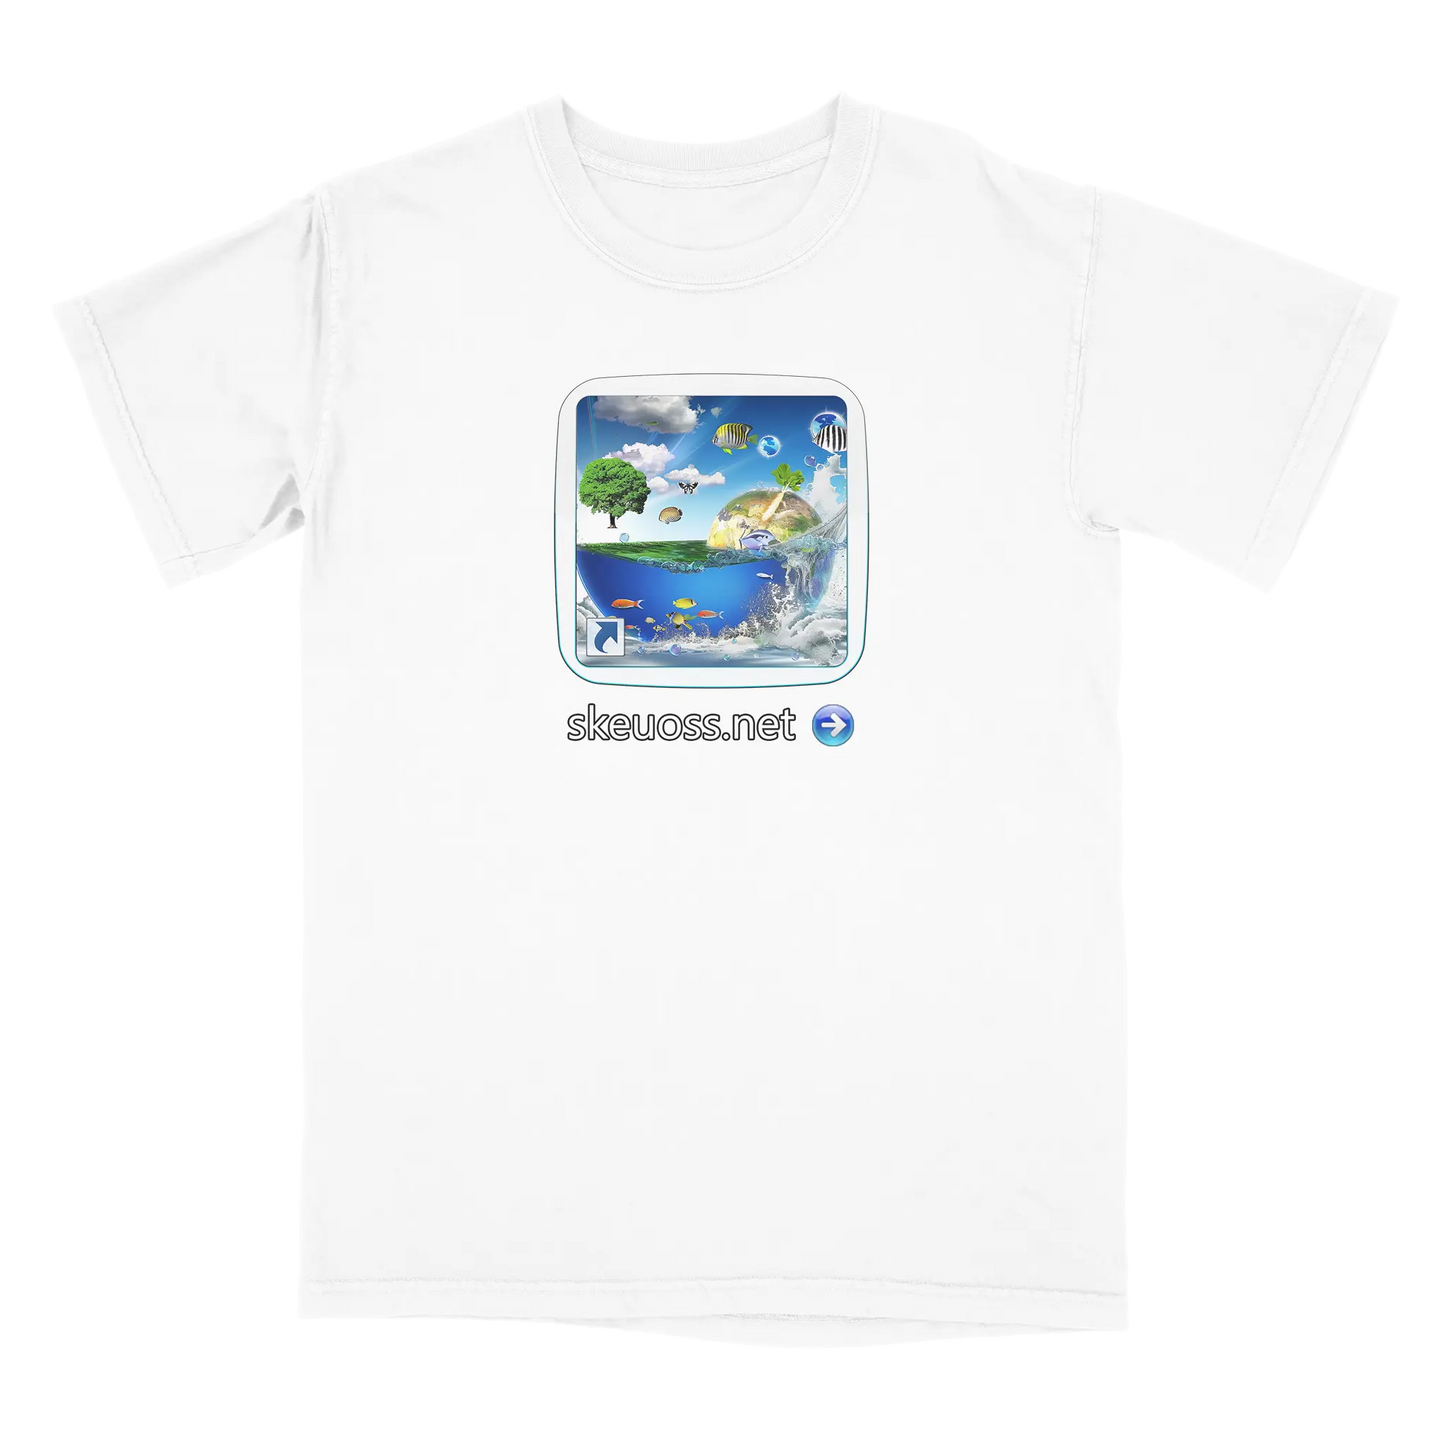 Frutiger Aero T-shirt - User Login Collection - User 189